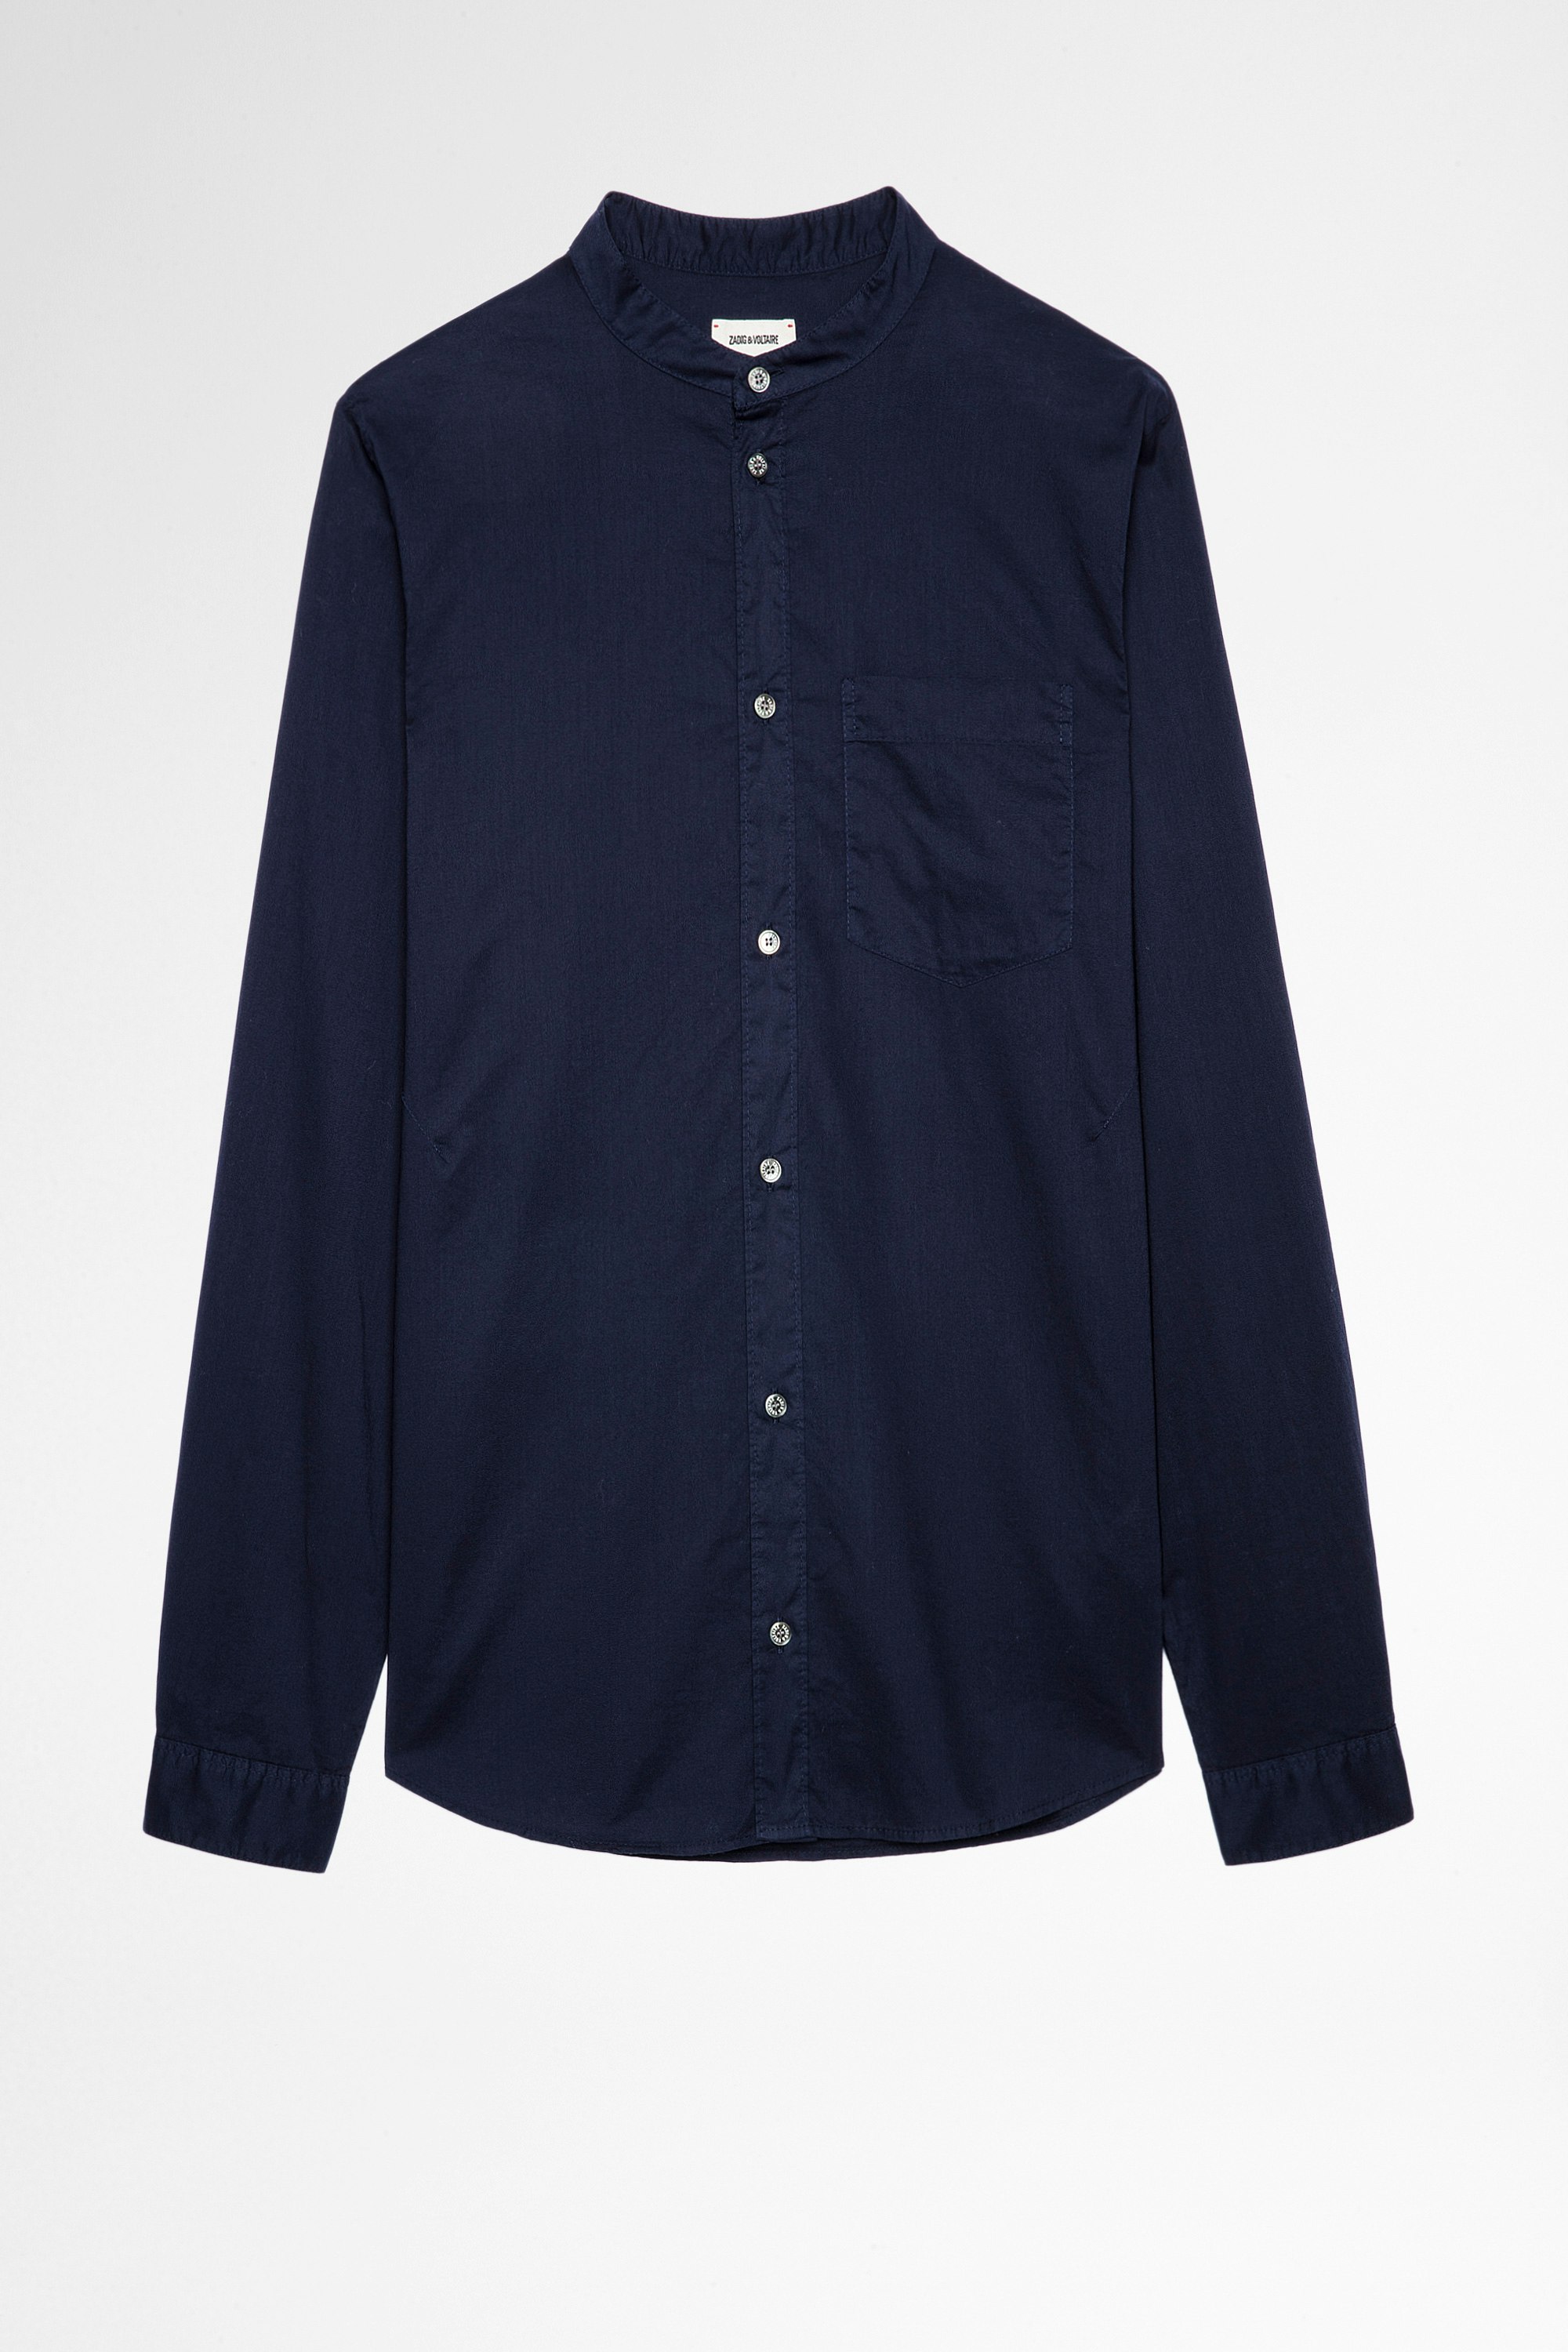 Camisa Thibaut Camisa de algodón azul marino para hombre